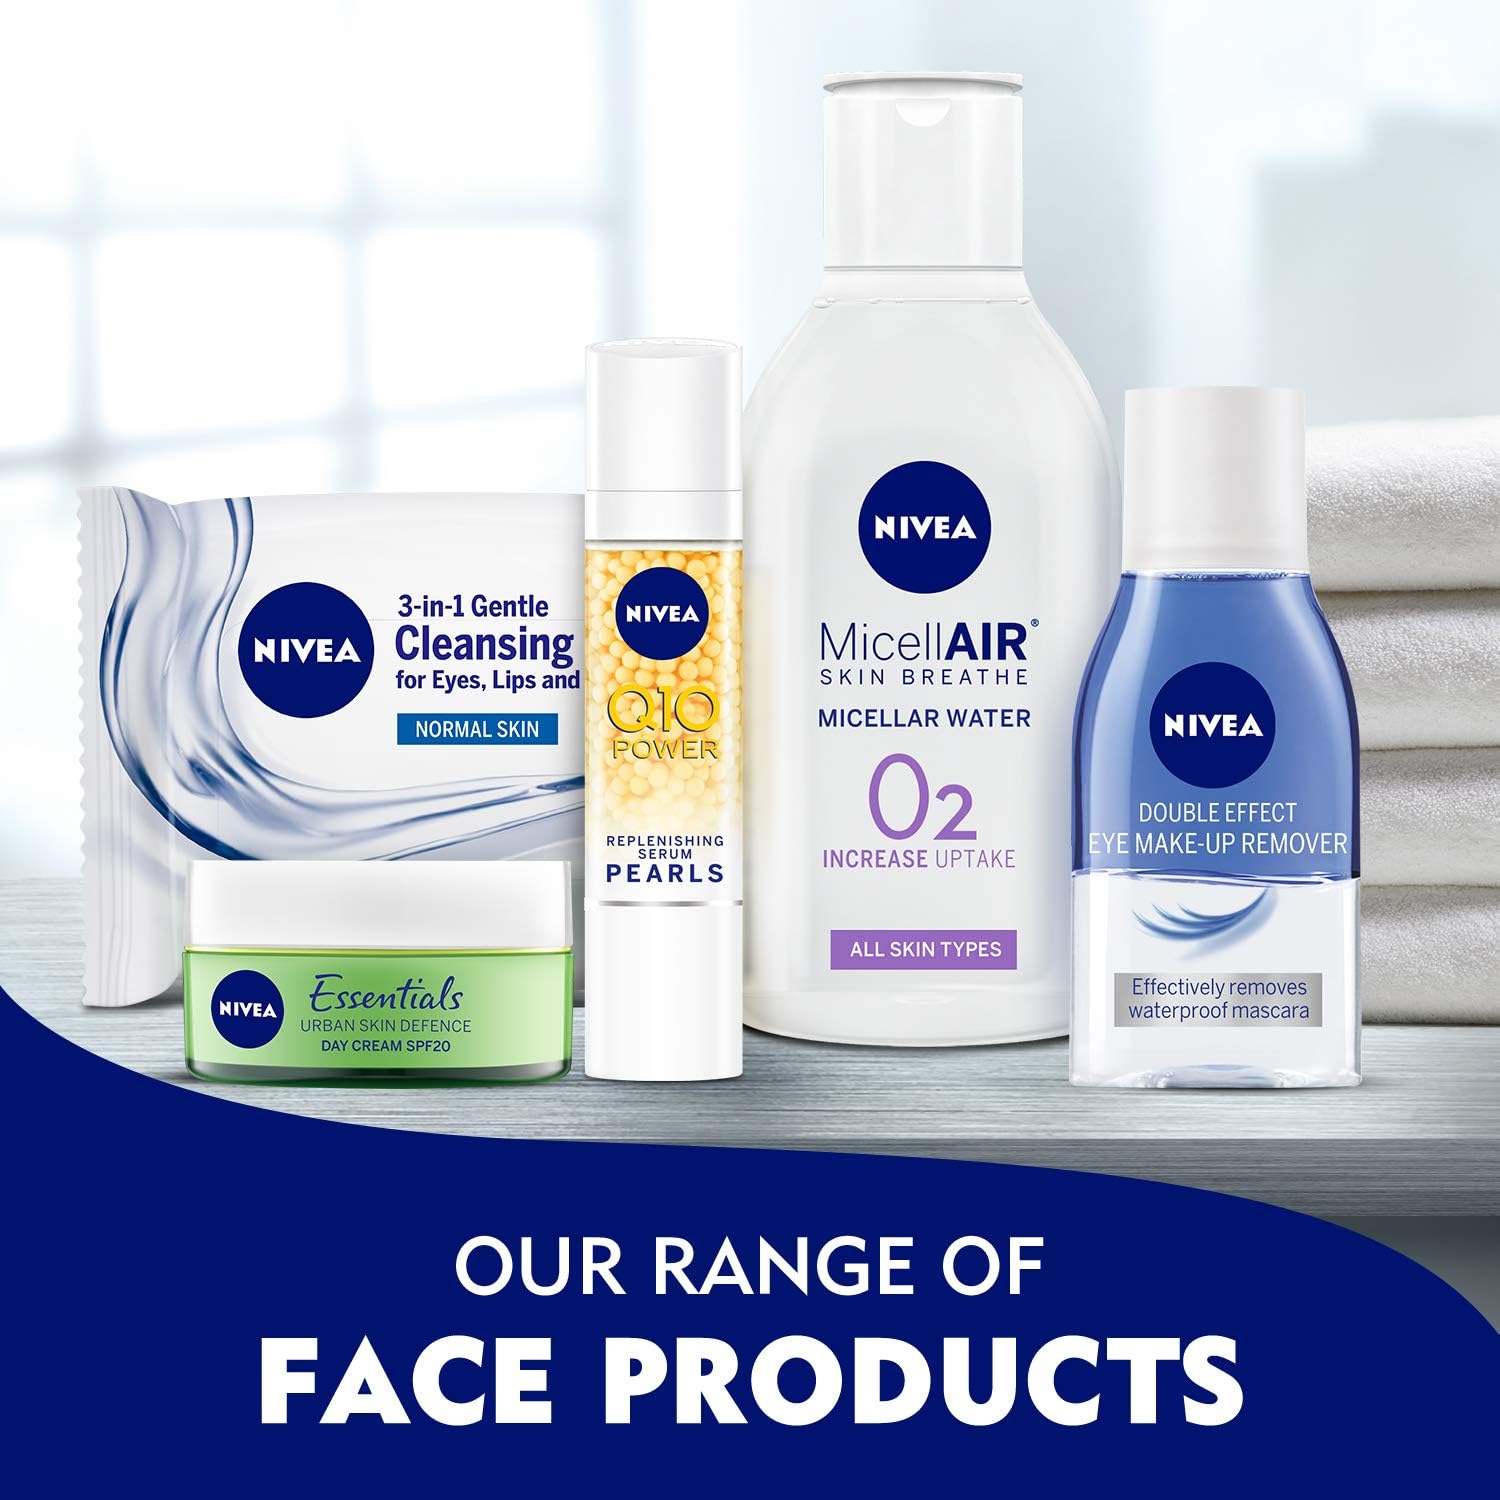 NIVEA Face Strips Unclog Pores Instantly, Skin Refining Clear-Up, Citrid Acid, 6 strips